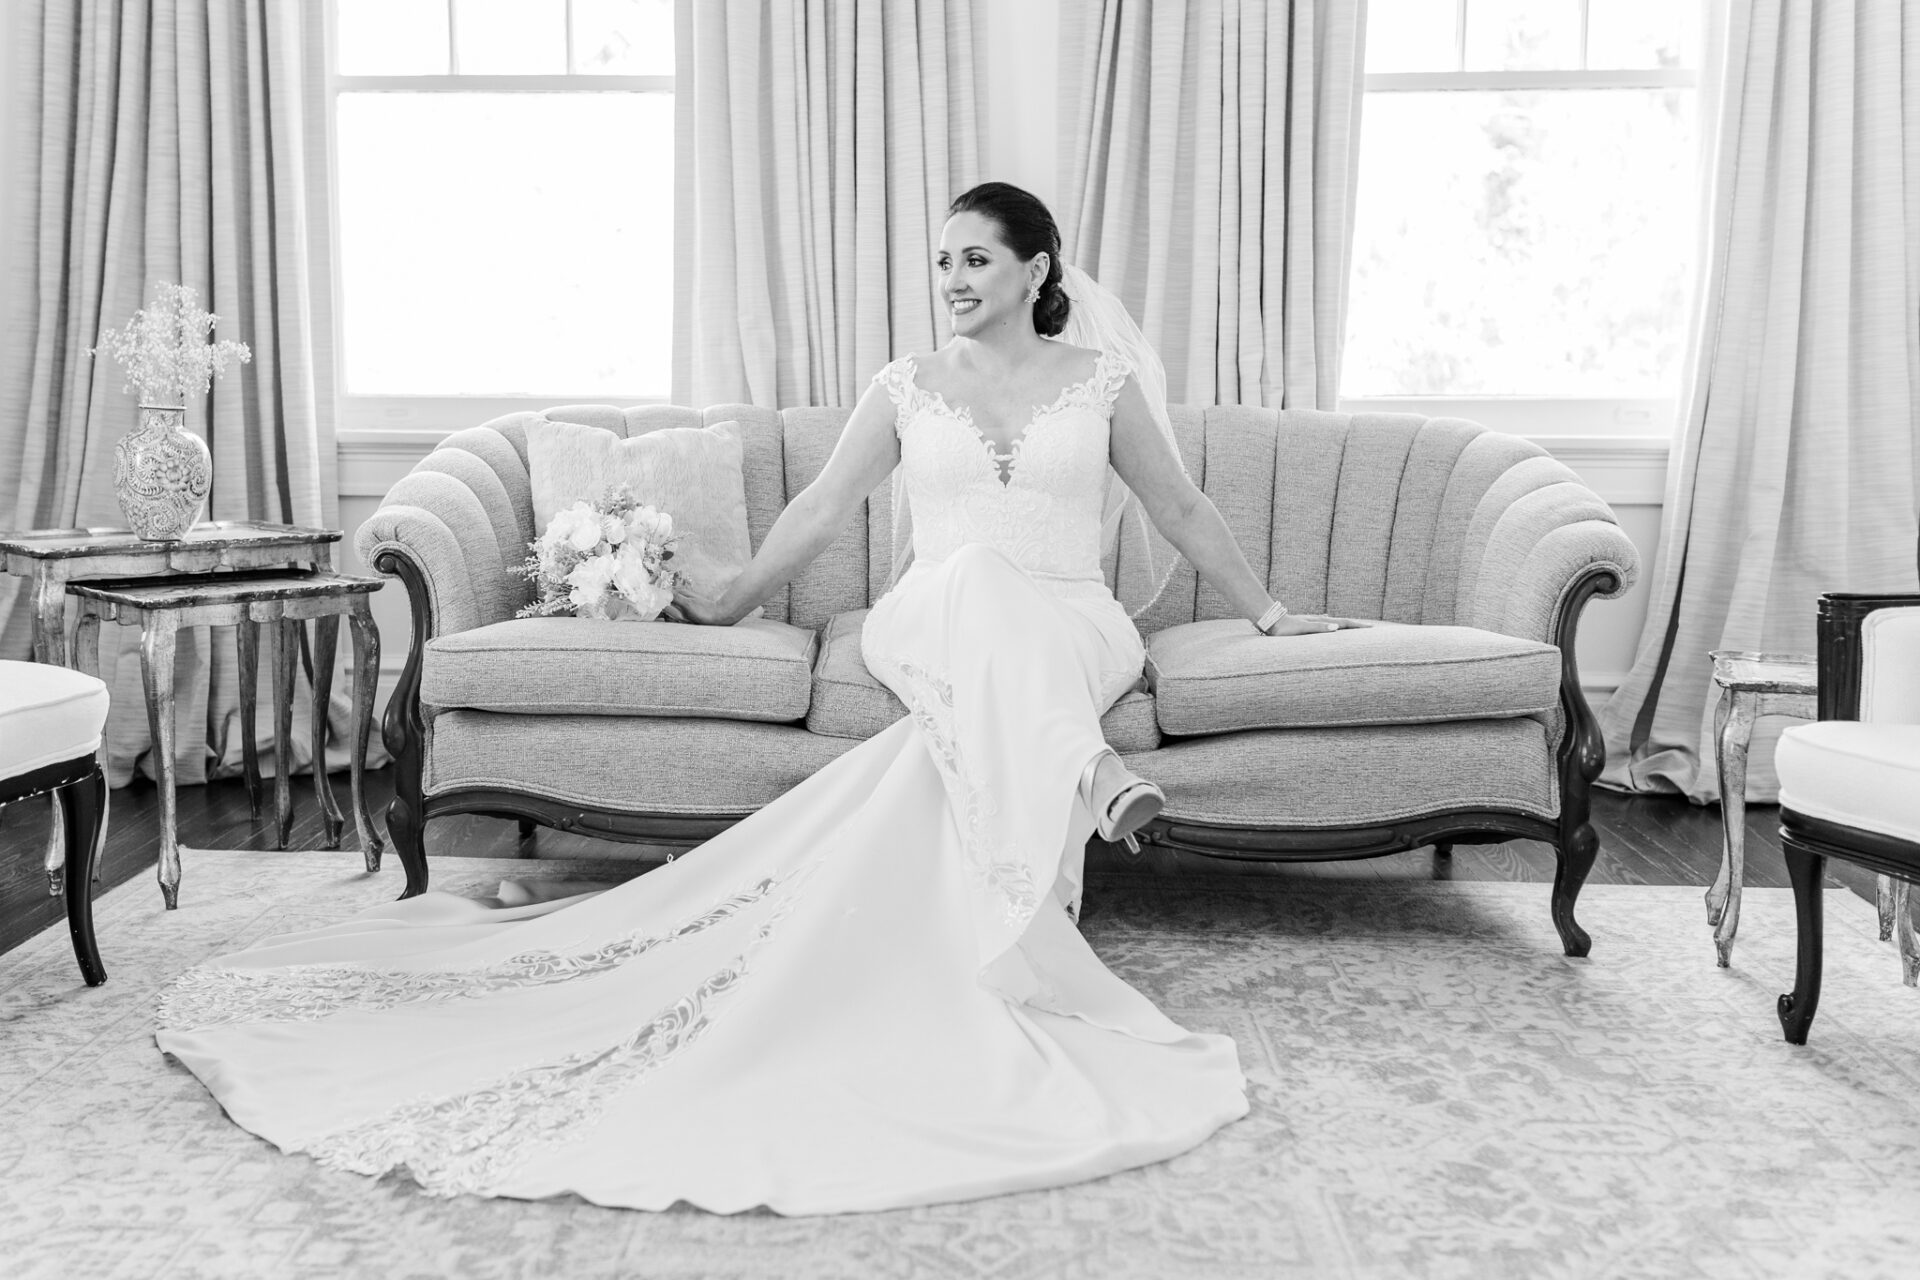 North Carolina Bridal Portrait Photographer Wedding Venue Location Inspiration